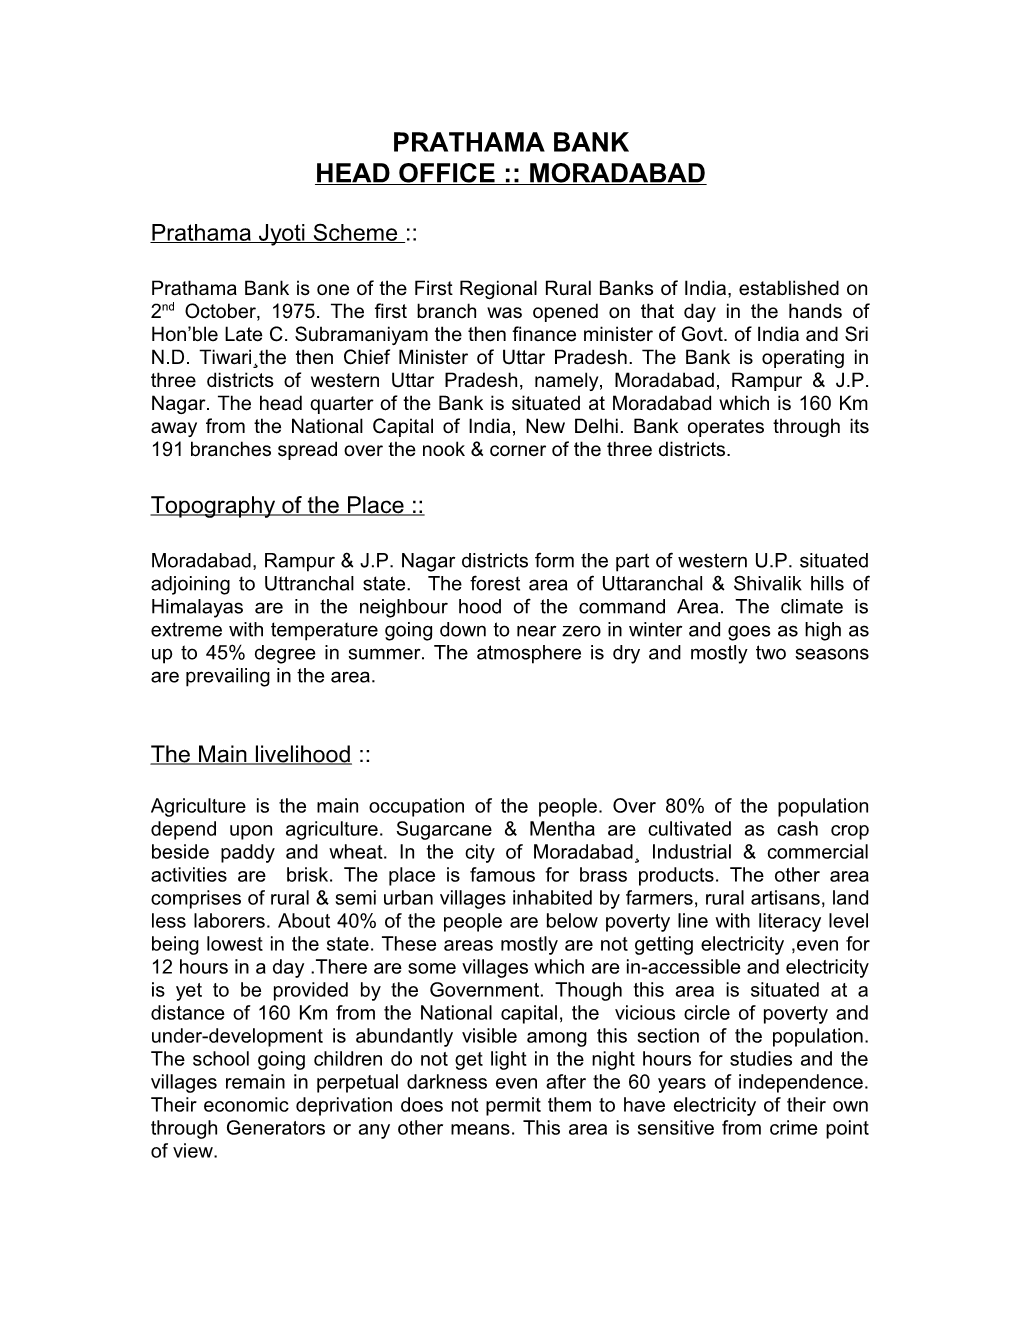 Head Office Moradabad